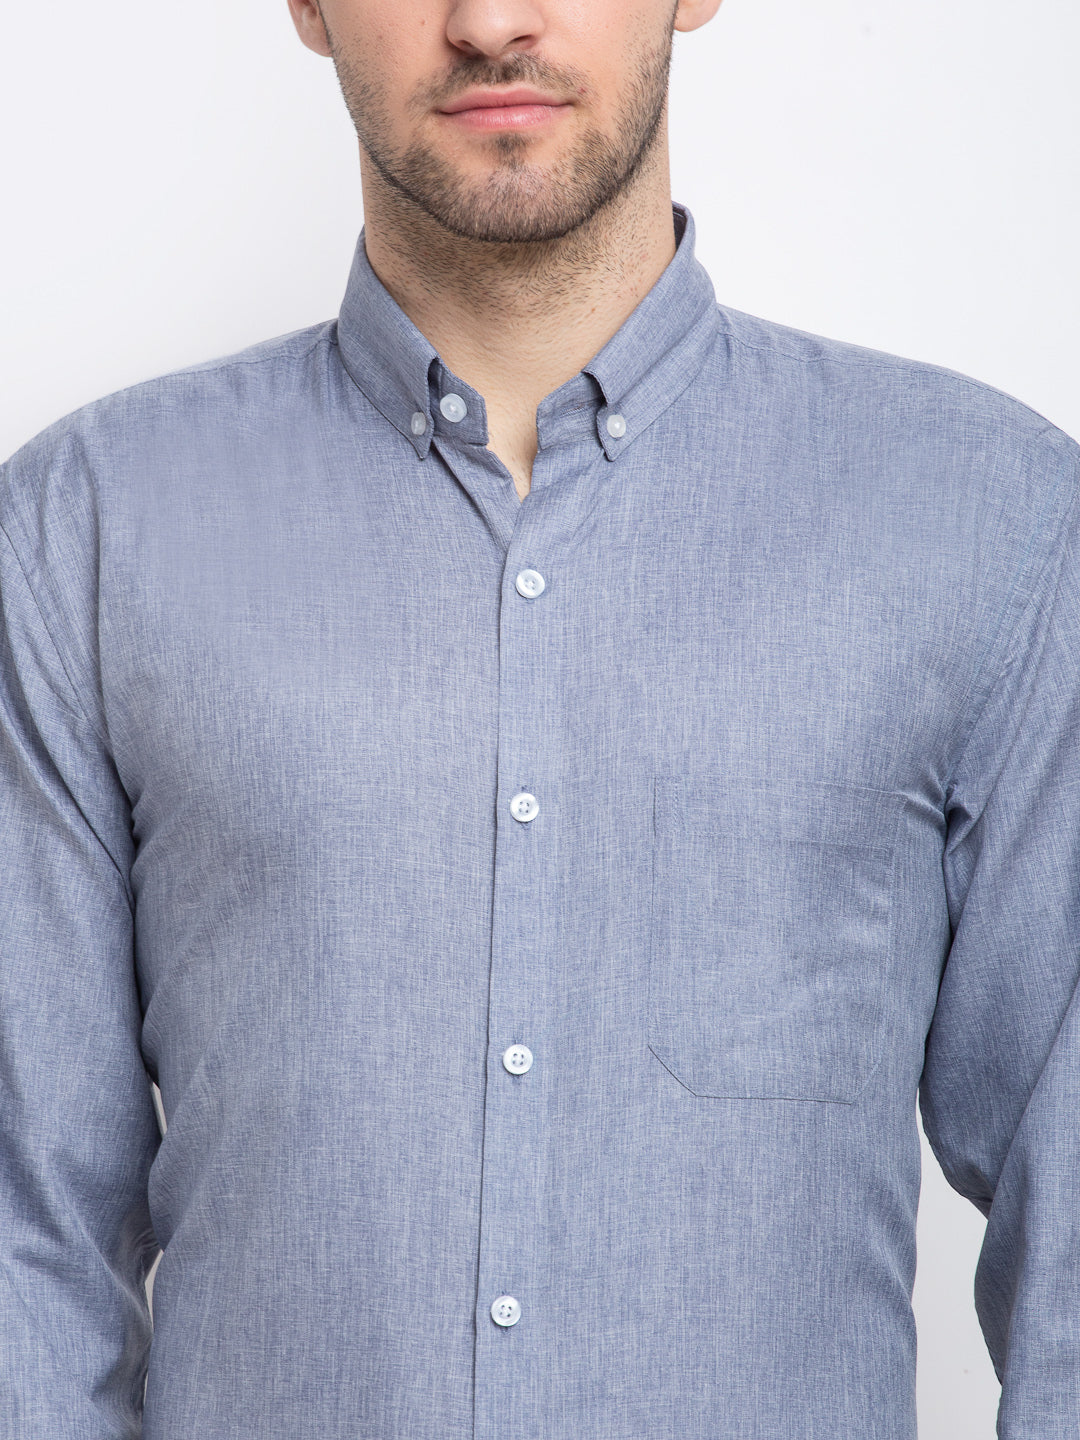 Jainish Grey Men's Button Down Collar Cotton Formal Shirt